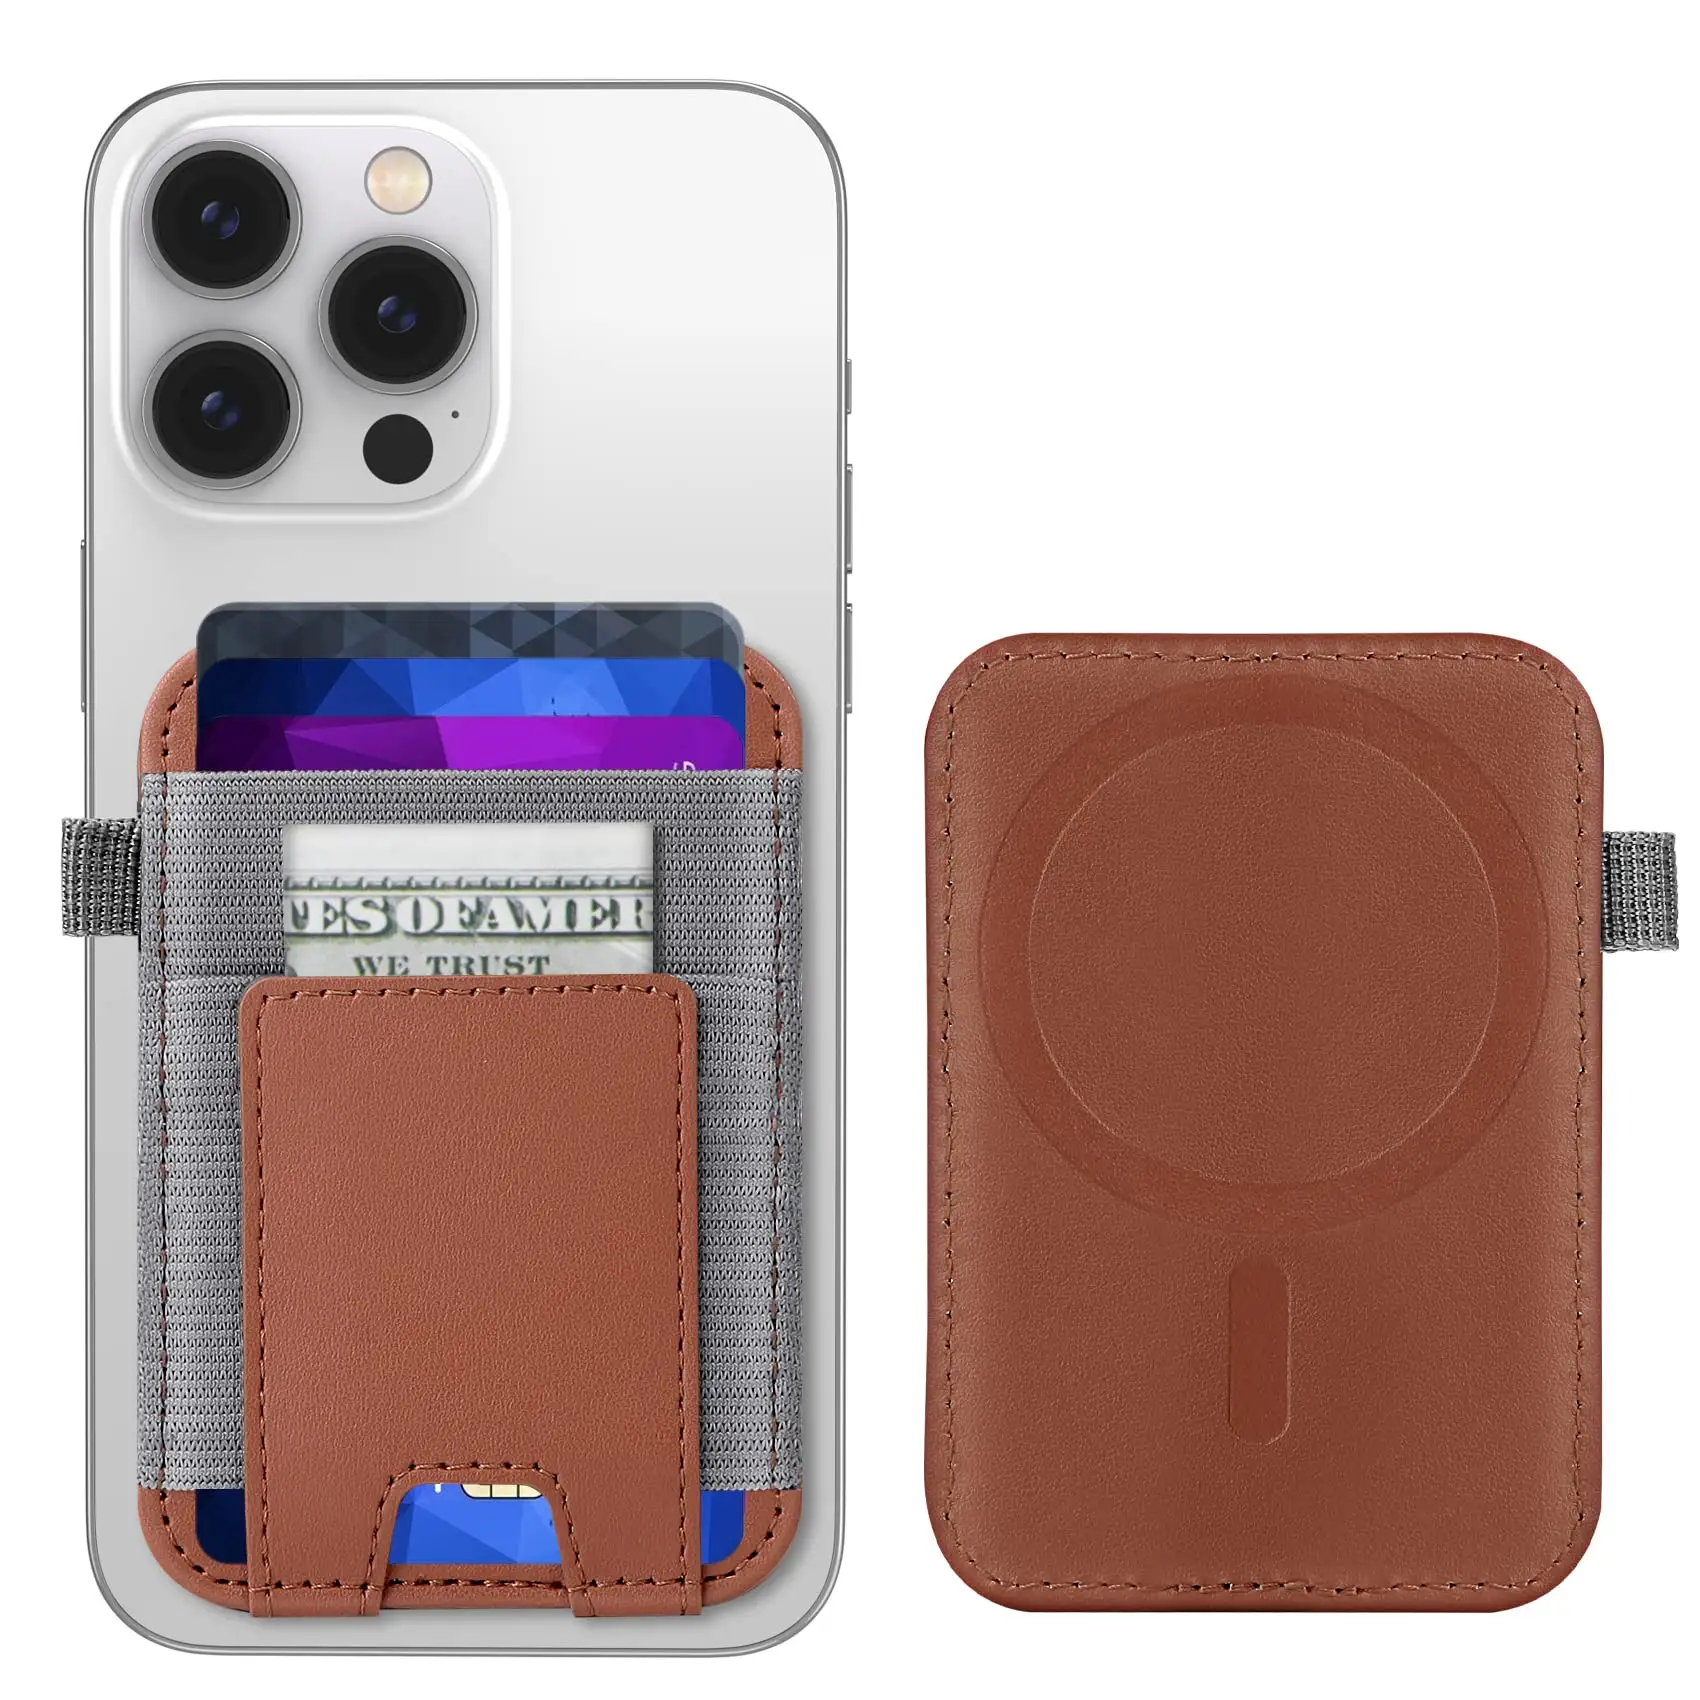 Manyetik RFID kart tutucu cep telefonu çanta manyetik kart tutucu cüzdan iPhone 5/14/13/12 serisi, Vegan deri